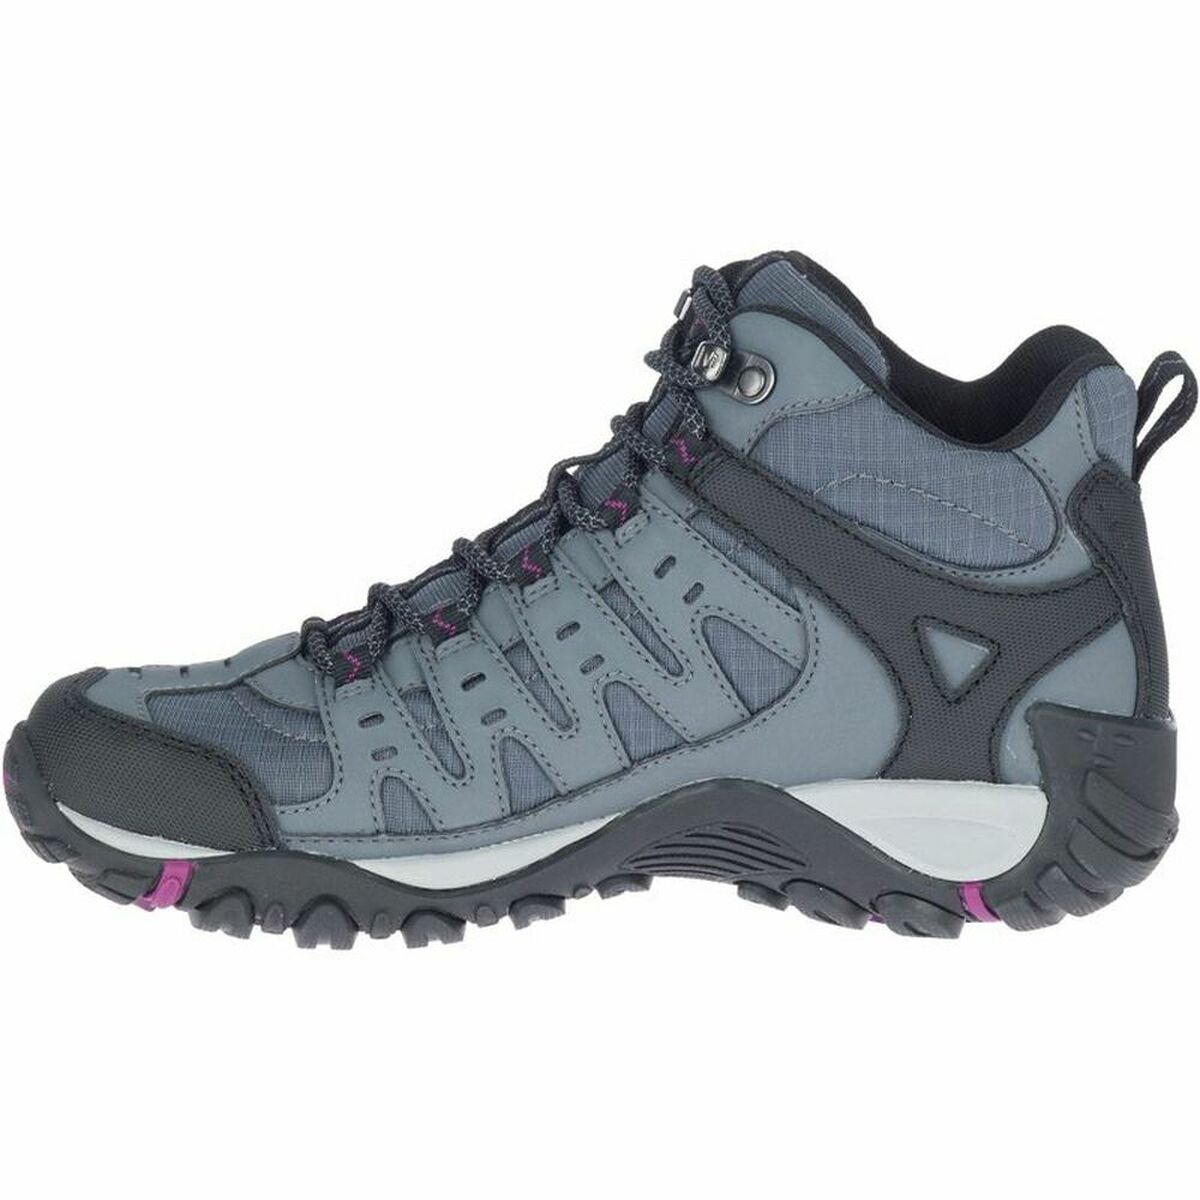 Hiking Boots Merrell Accentor Sport Mid - Outland Gear